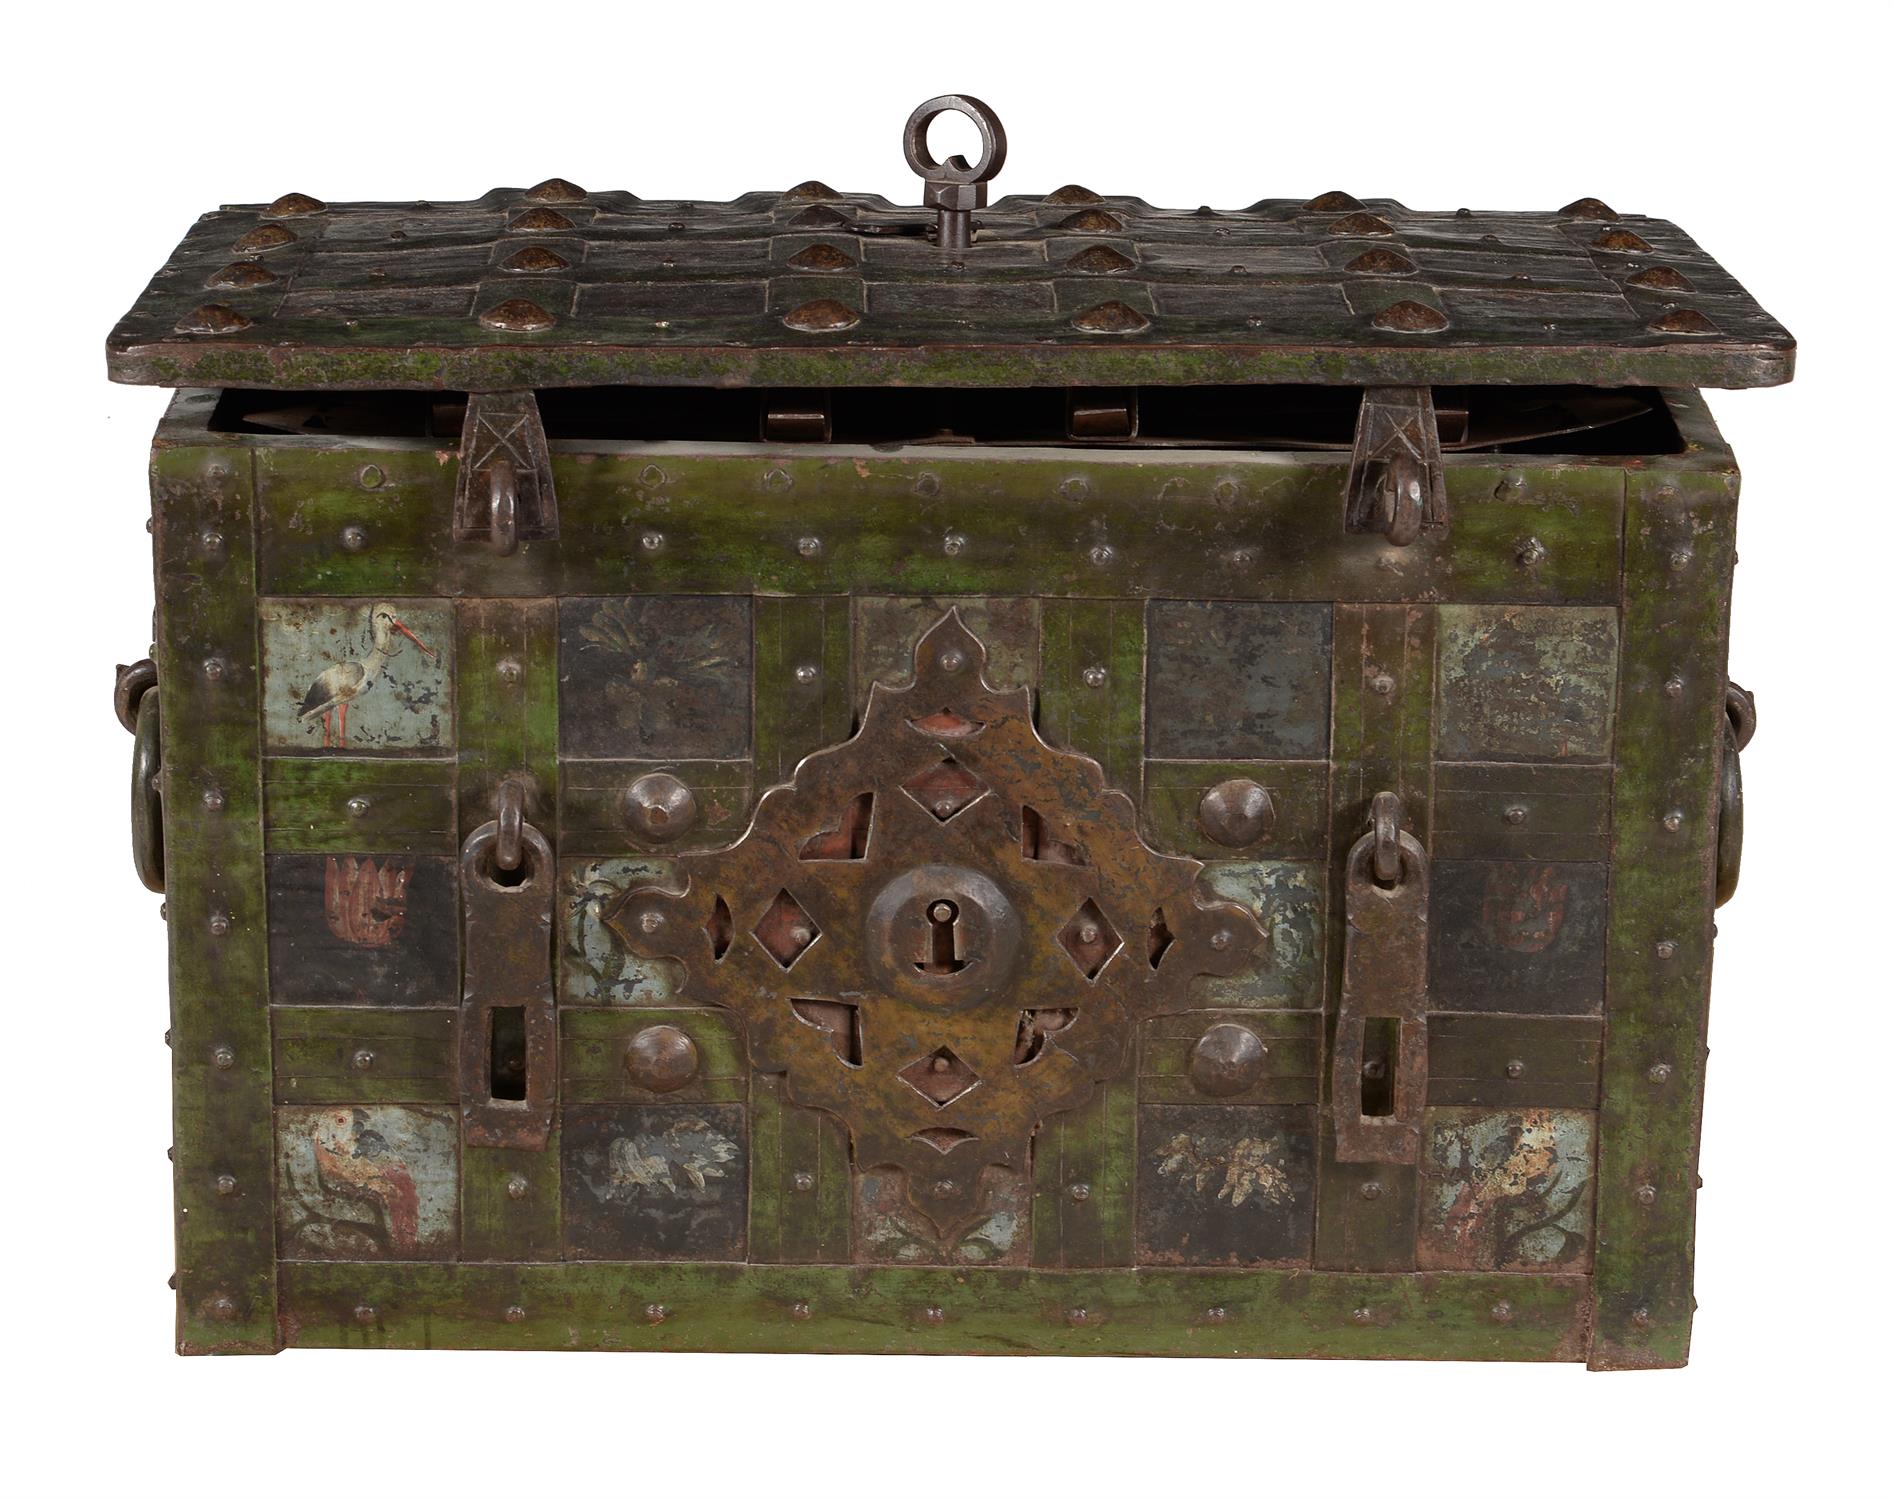 A rare painted iron Armada chest